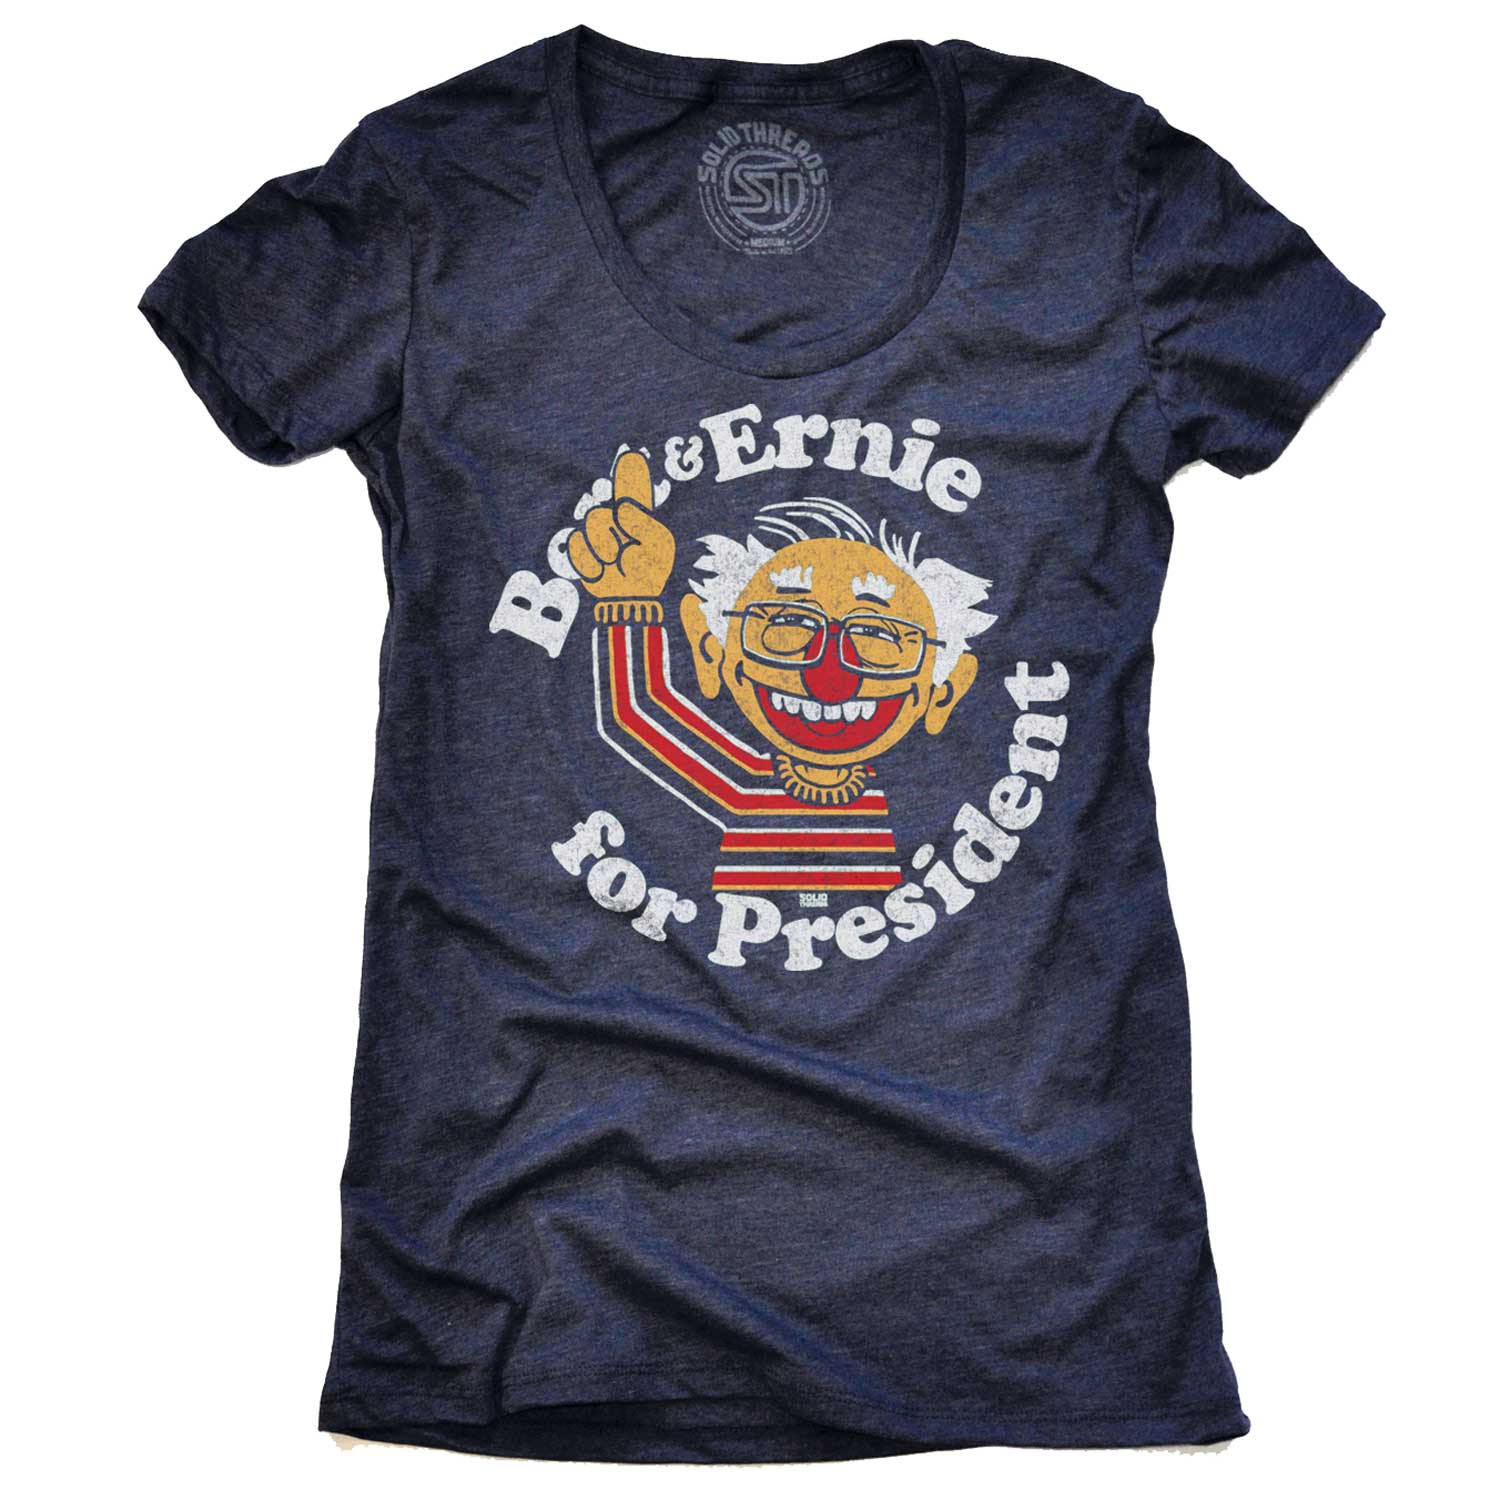 Women's Bernie (Sanders) Muppet T-shirt